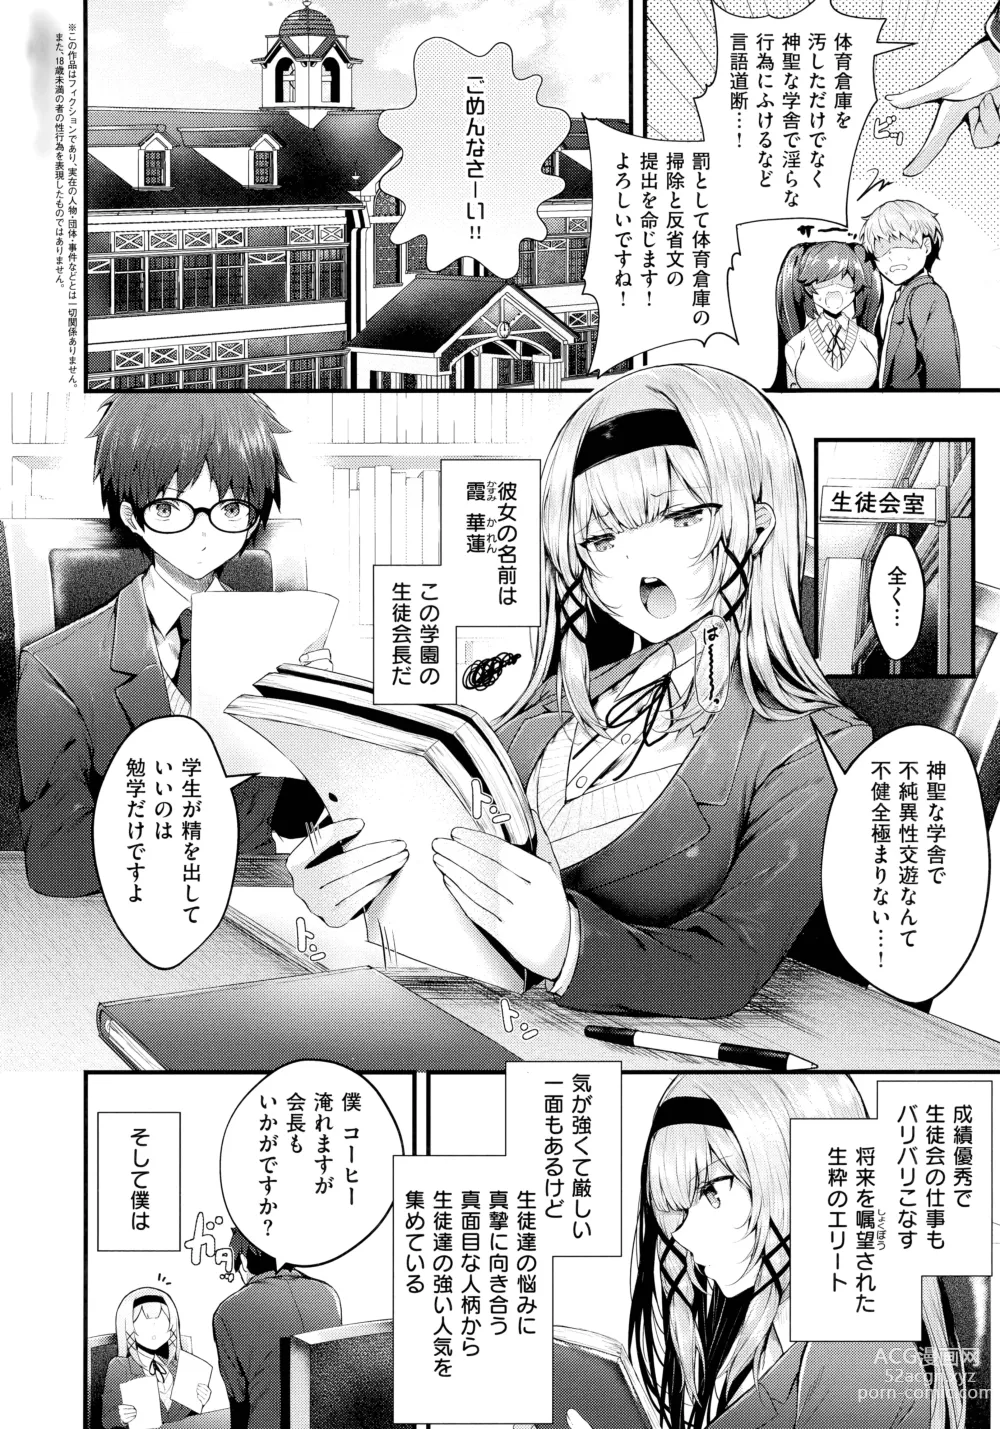 Page 8 of manga Namaiki Love Hole + Melonbooks Kounyu Tokuten + Toranoana Kounyu Tokuten